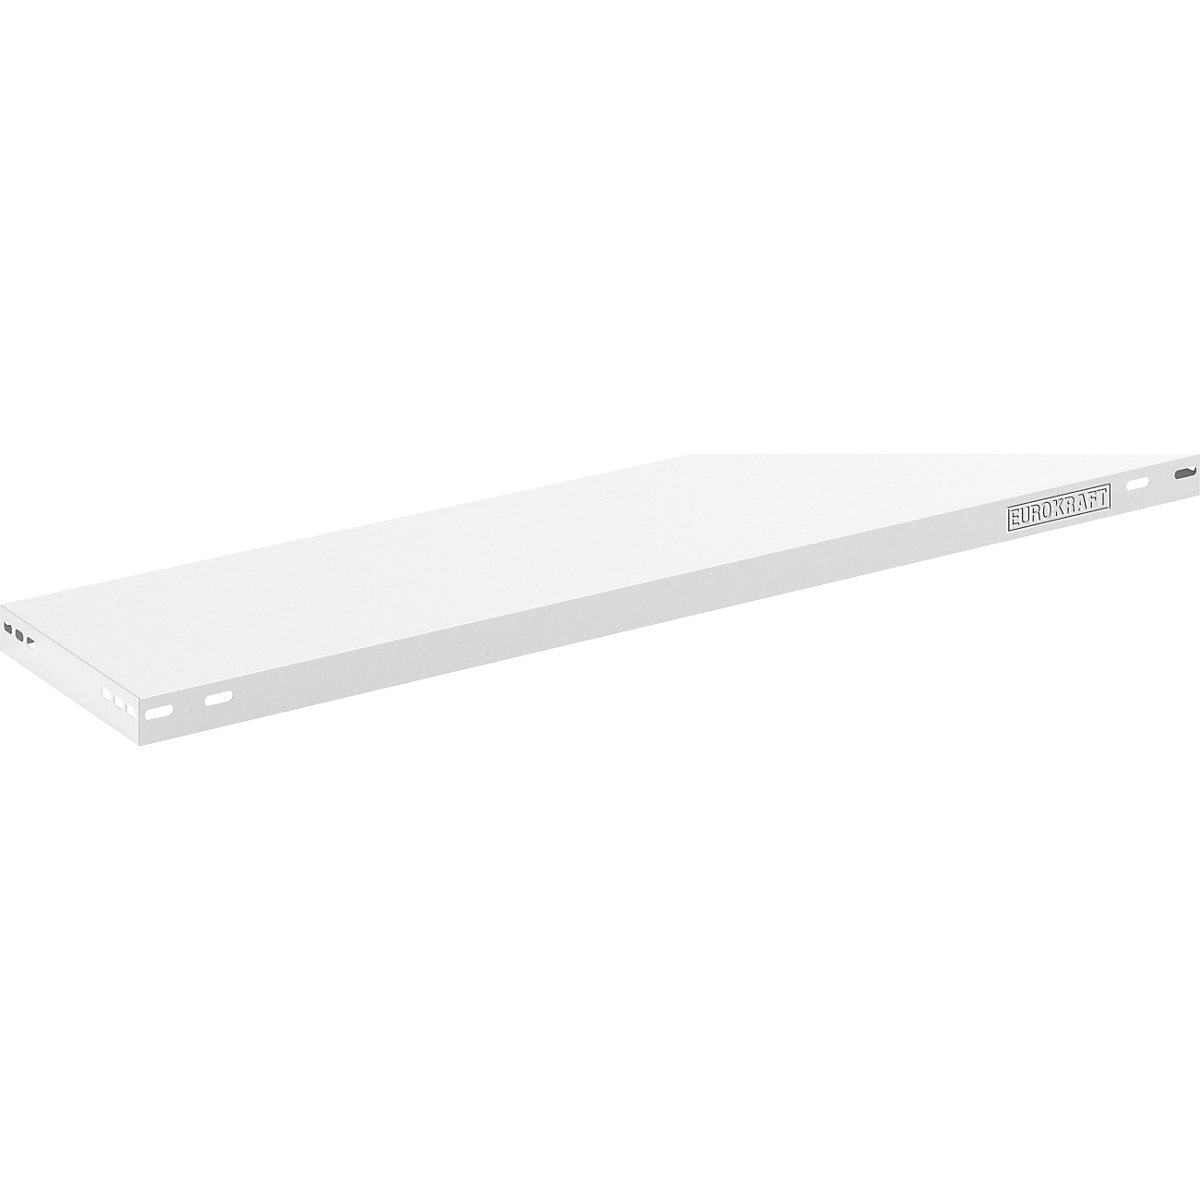 Shelf – eurokraft pro, light grey, medium duty, WxD 1000 x 300 mm